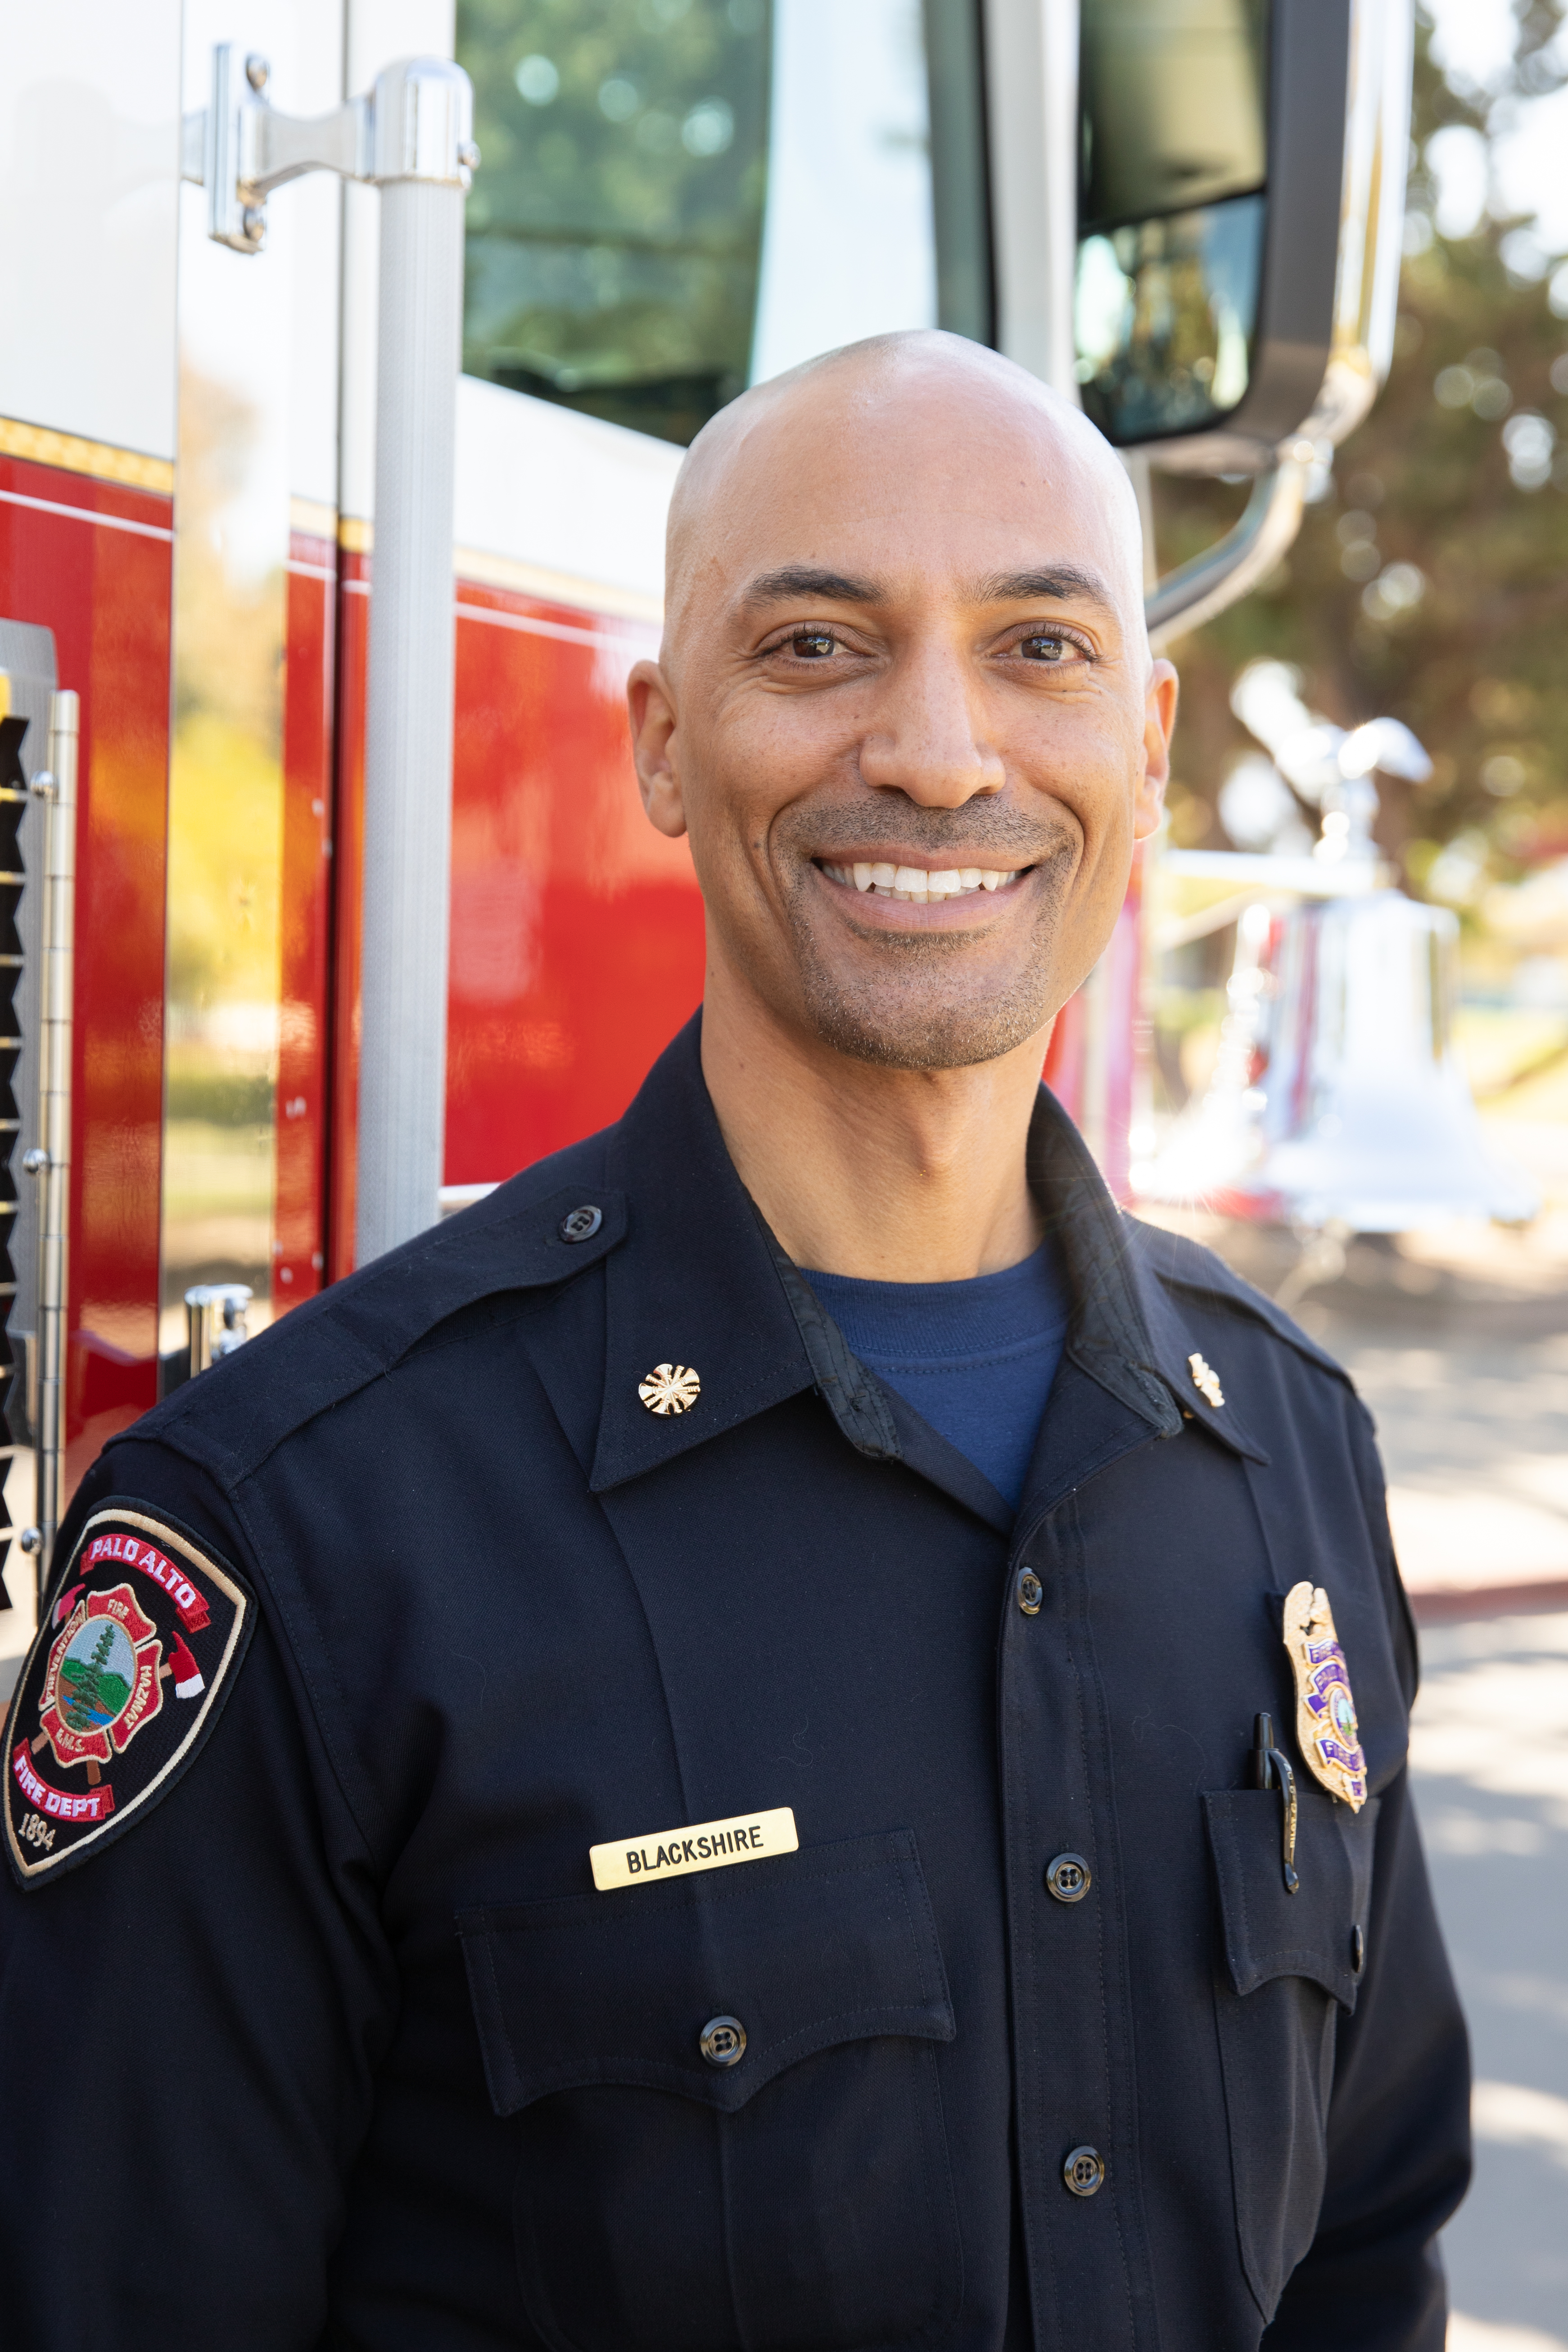 Geo Blackshire, Palo Alto Fire Chief